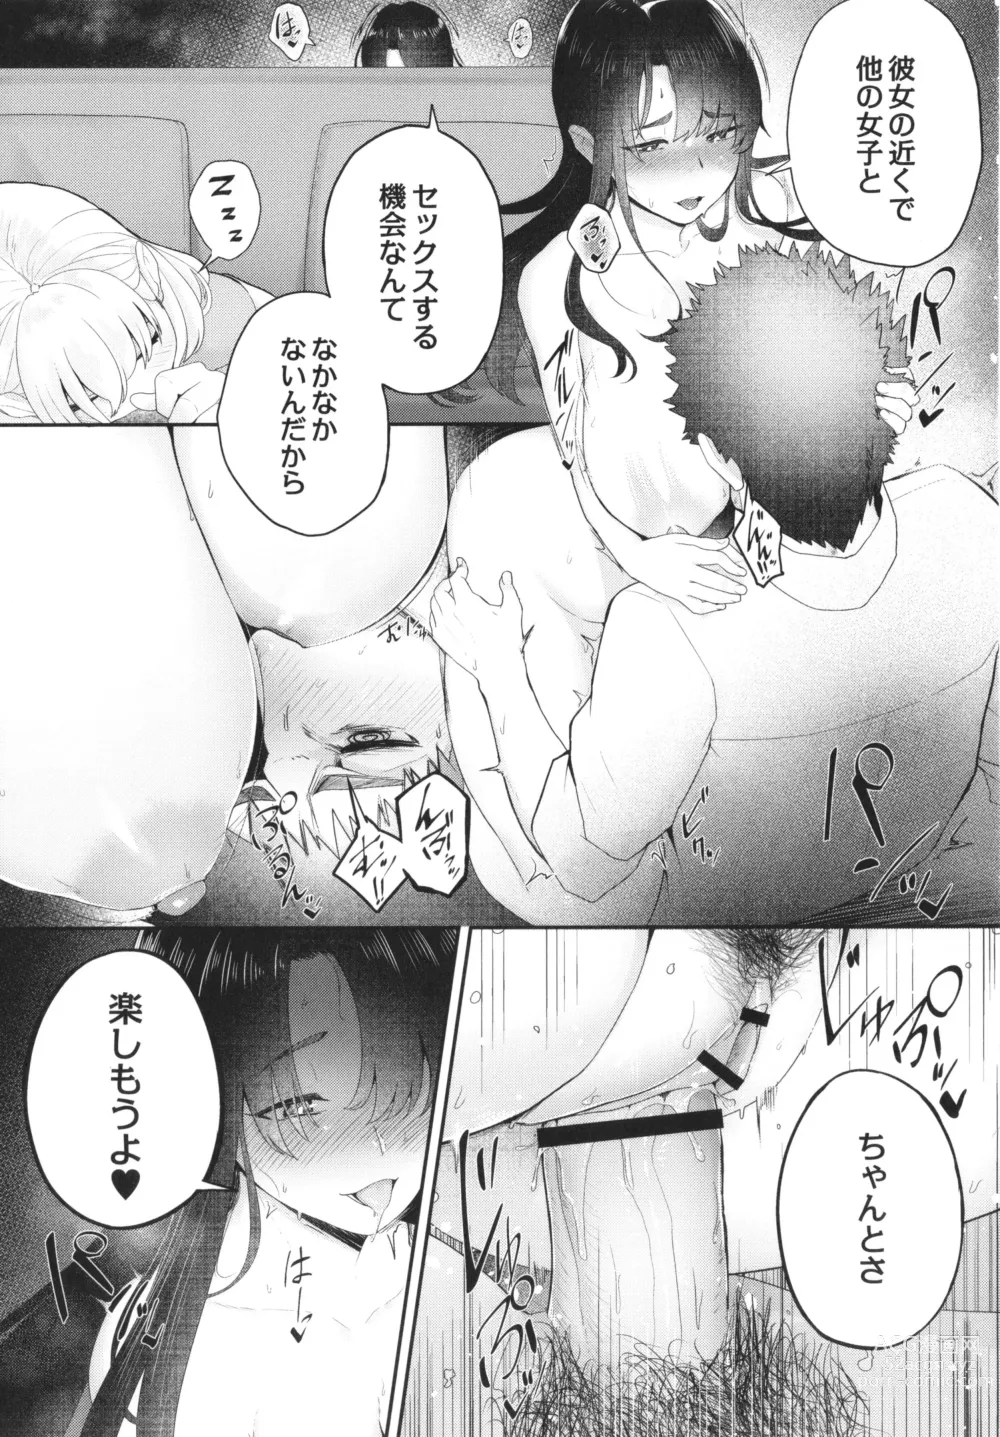 Page 202 of manga Kakuregoto